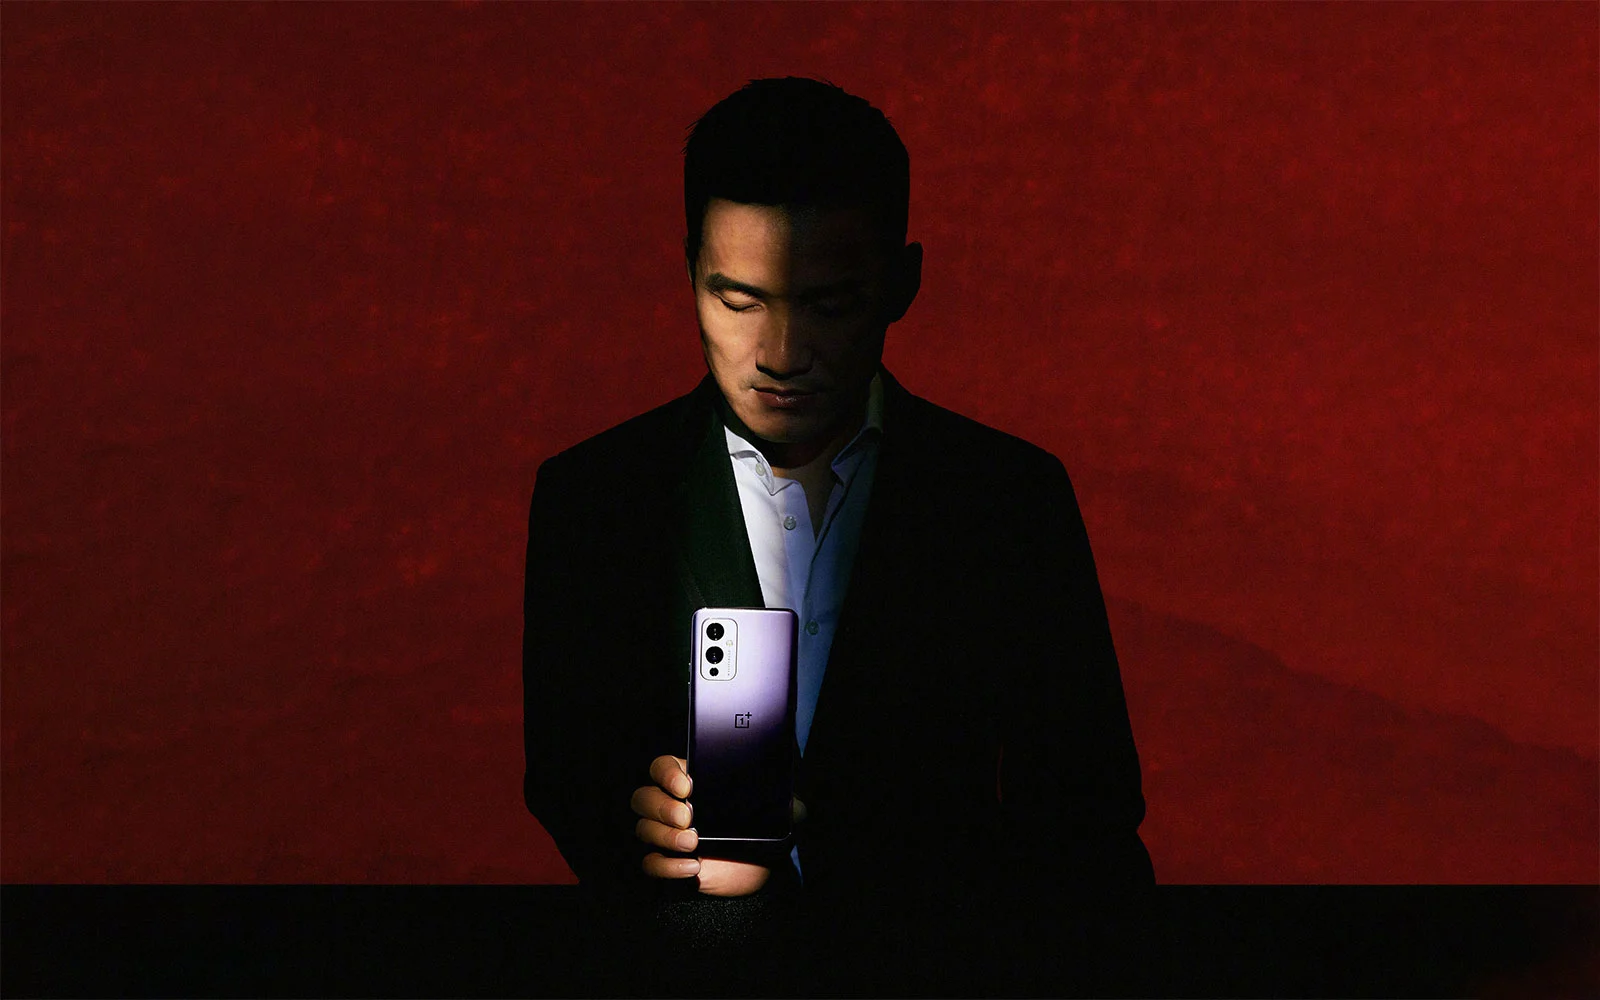 OnePlus founder Pete Lau